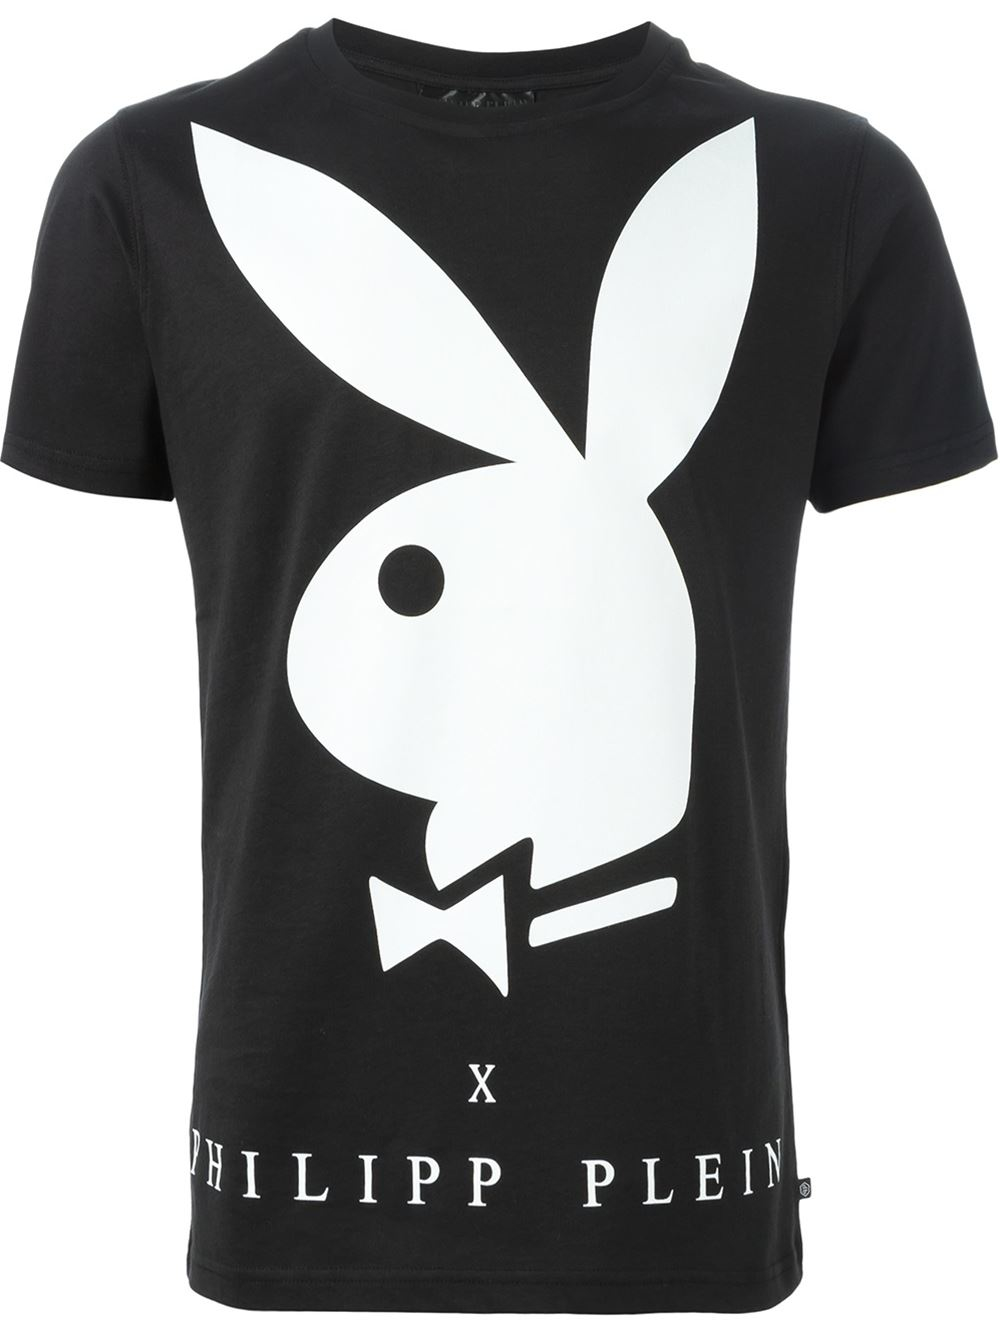 Philipp Plein Playboy Bunny T-shirt in Black for Men - Lyst